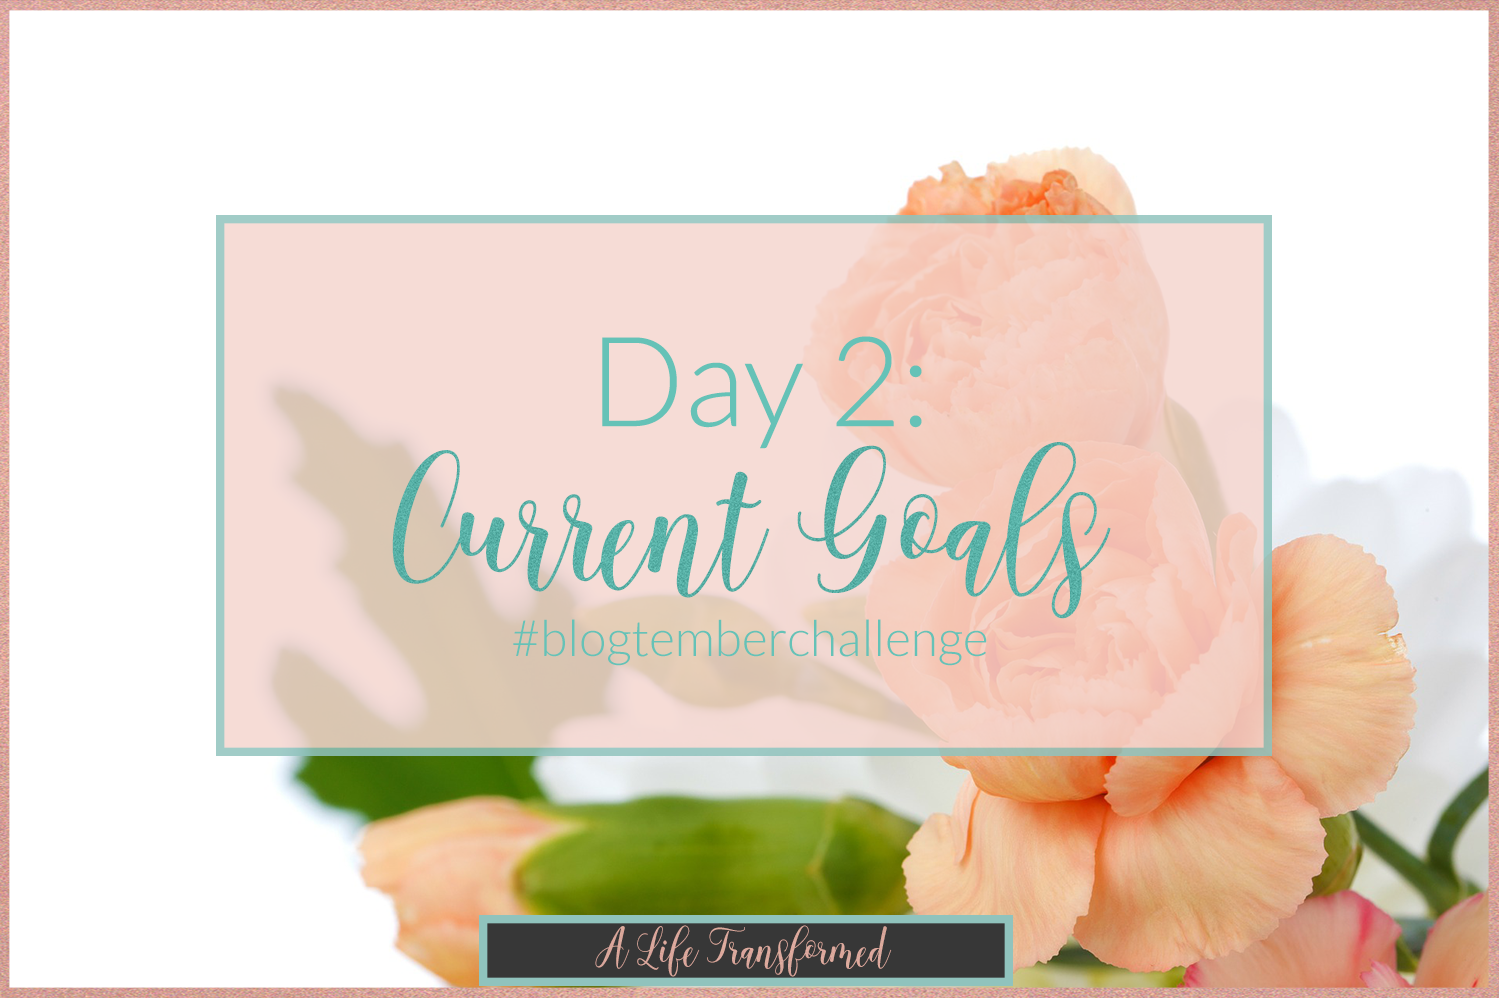 Day-2-Current-Goals-blogtemberchallenge